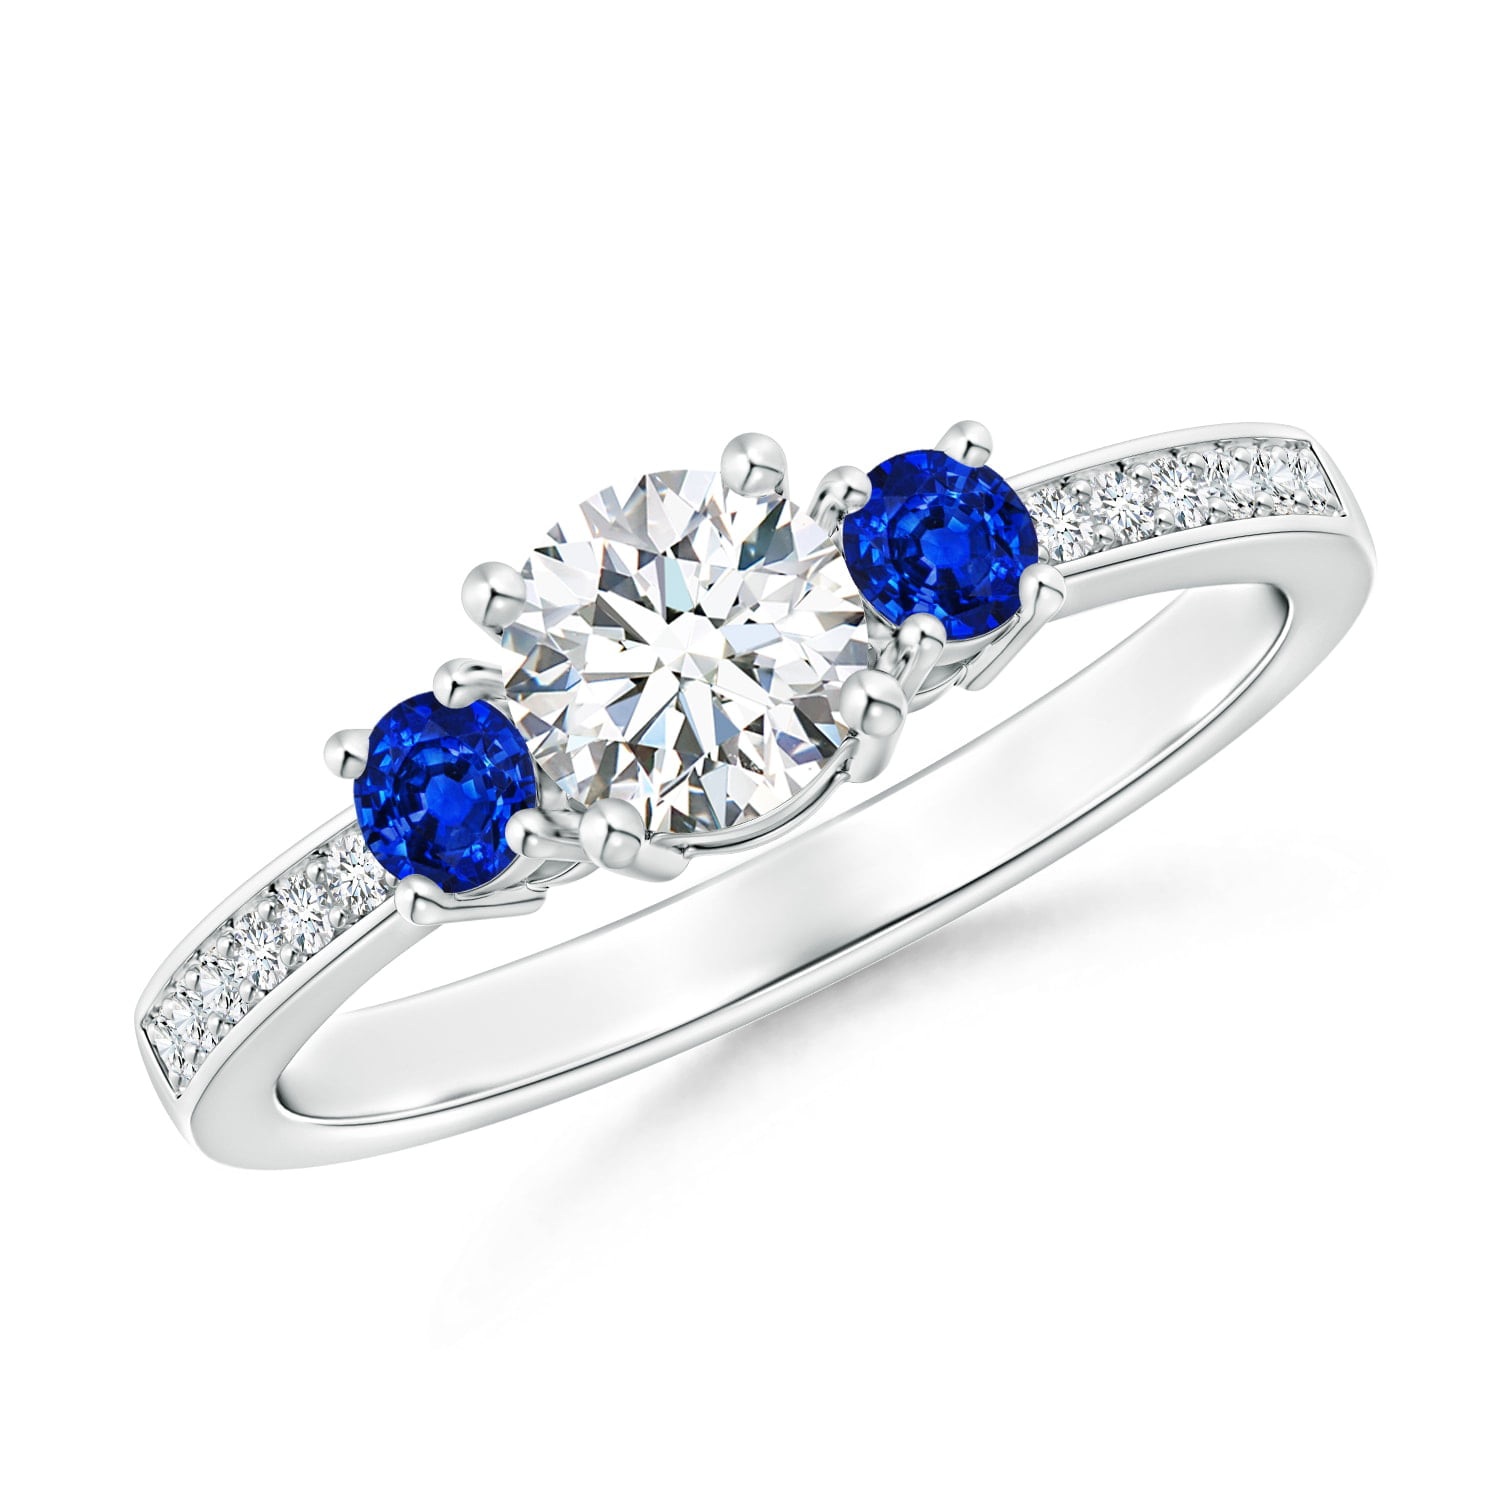 Angara - April Birthstone Ring - Classic Three Stone Diamond and Blue ...